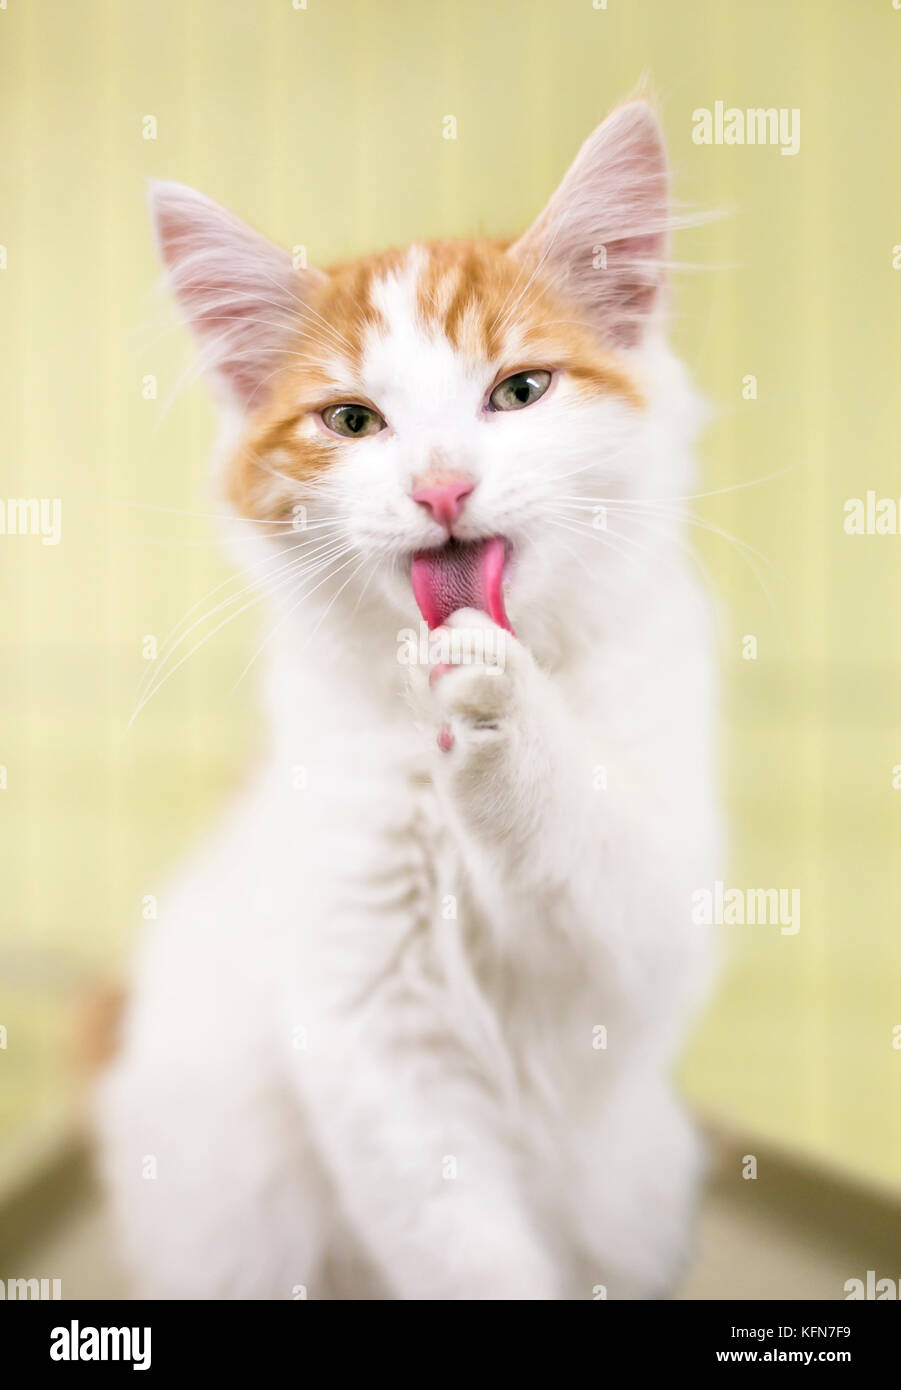 A white kitten with orange tabby markings grooming itself Stock Photo